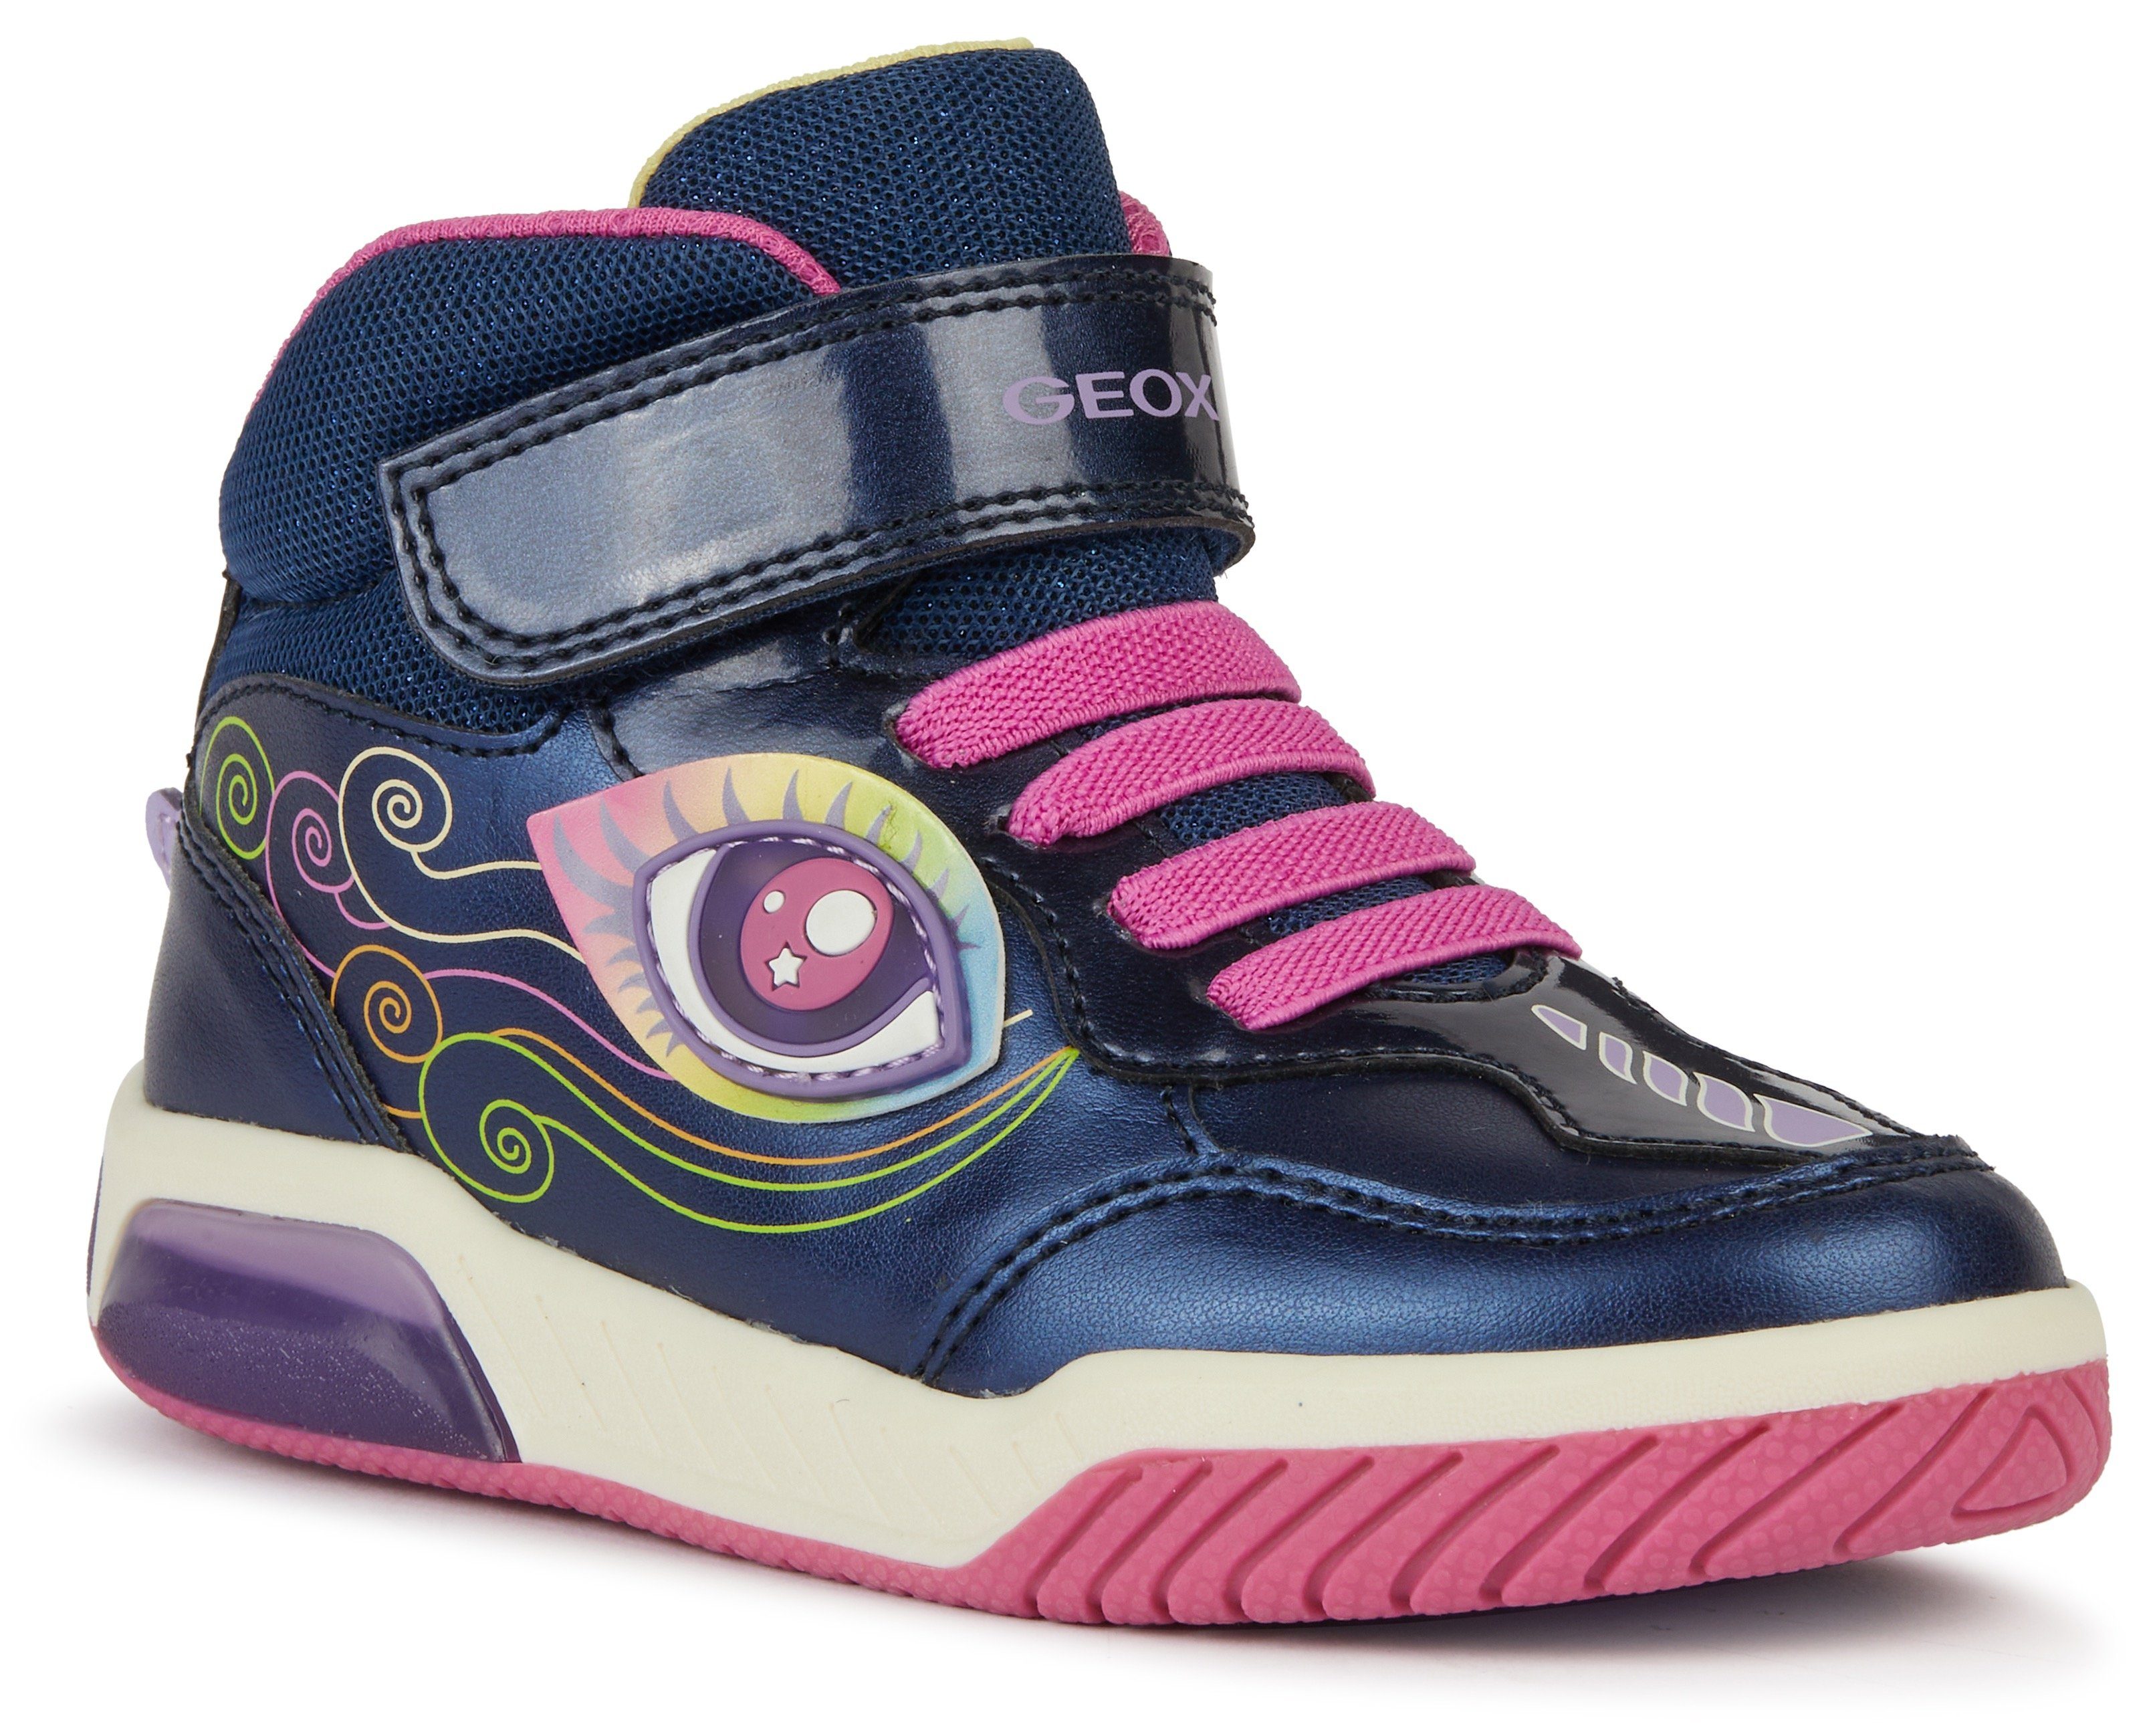 Geox Blinkschuh J Blinkfunktion cooler mit Sneaker GIRL INEK